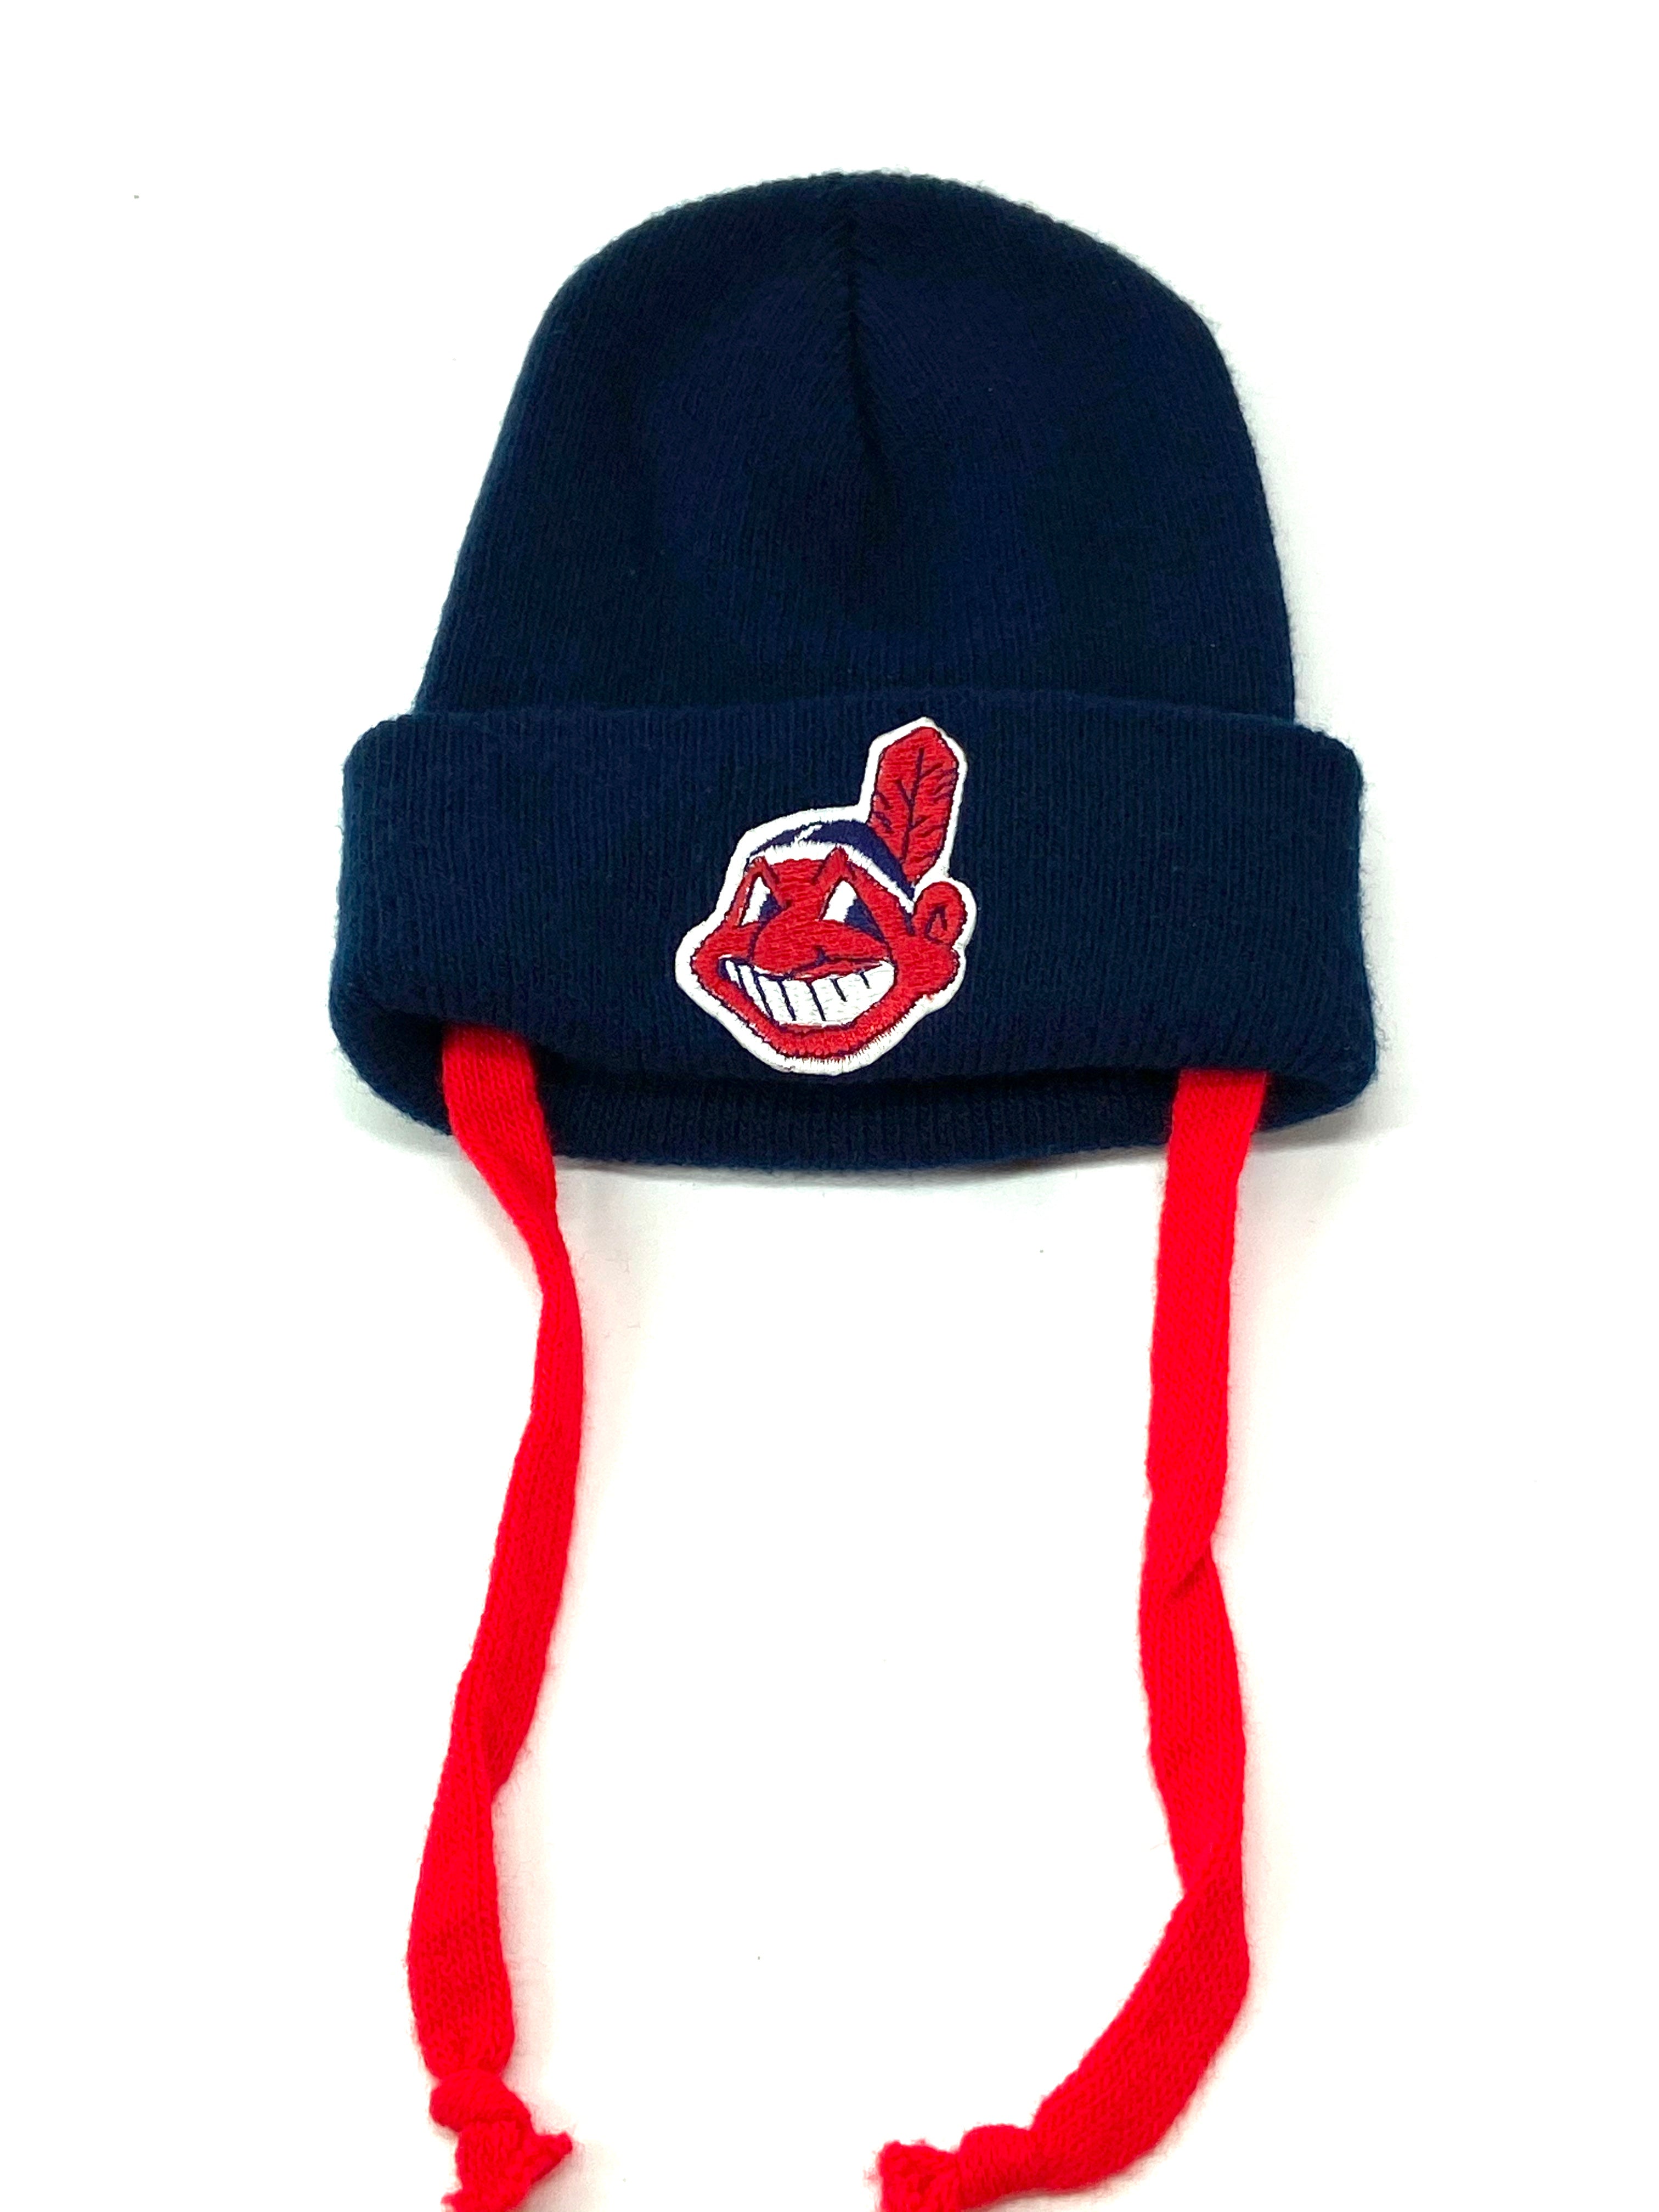 Cleveland Indians Vintage MLB Child's Knit Hat by Rossmor Industries –  Jeff's Vintage Treasure